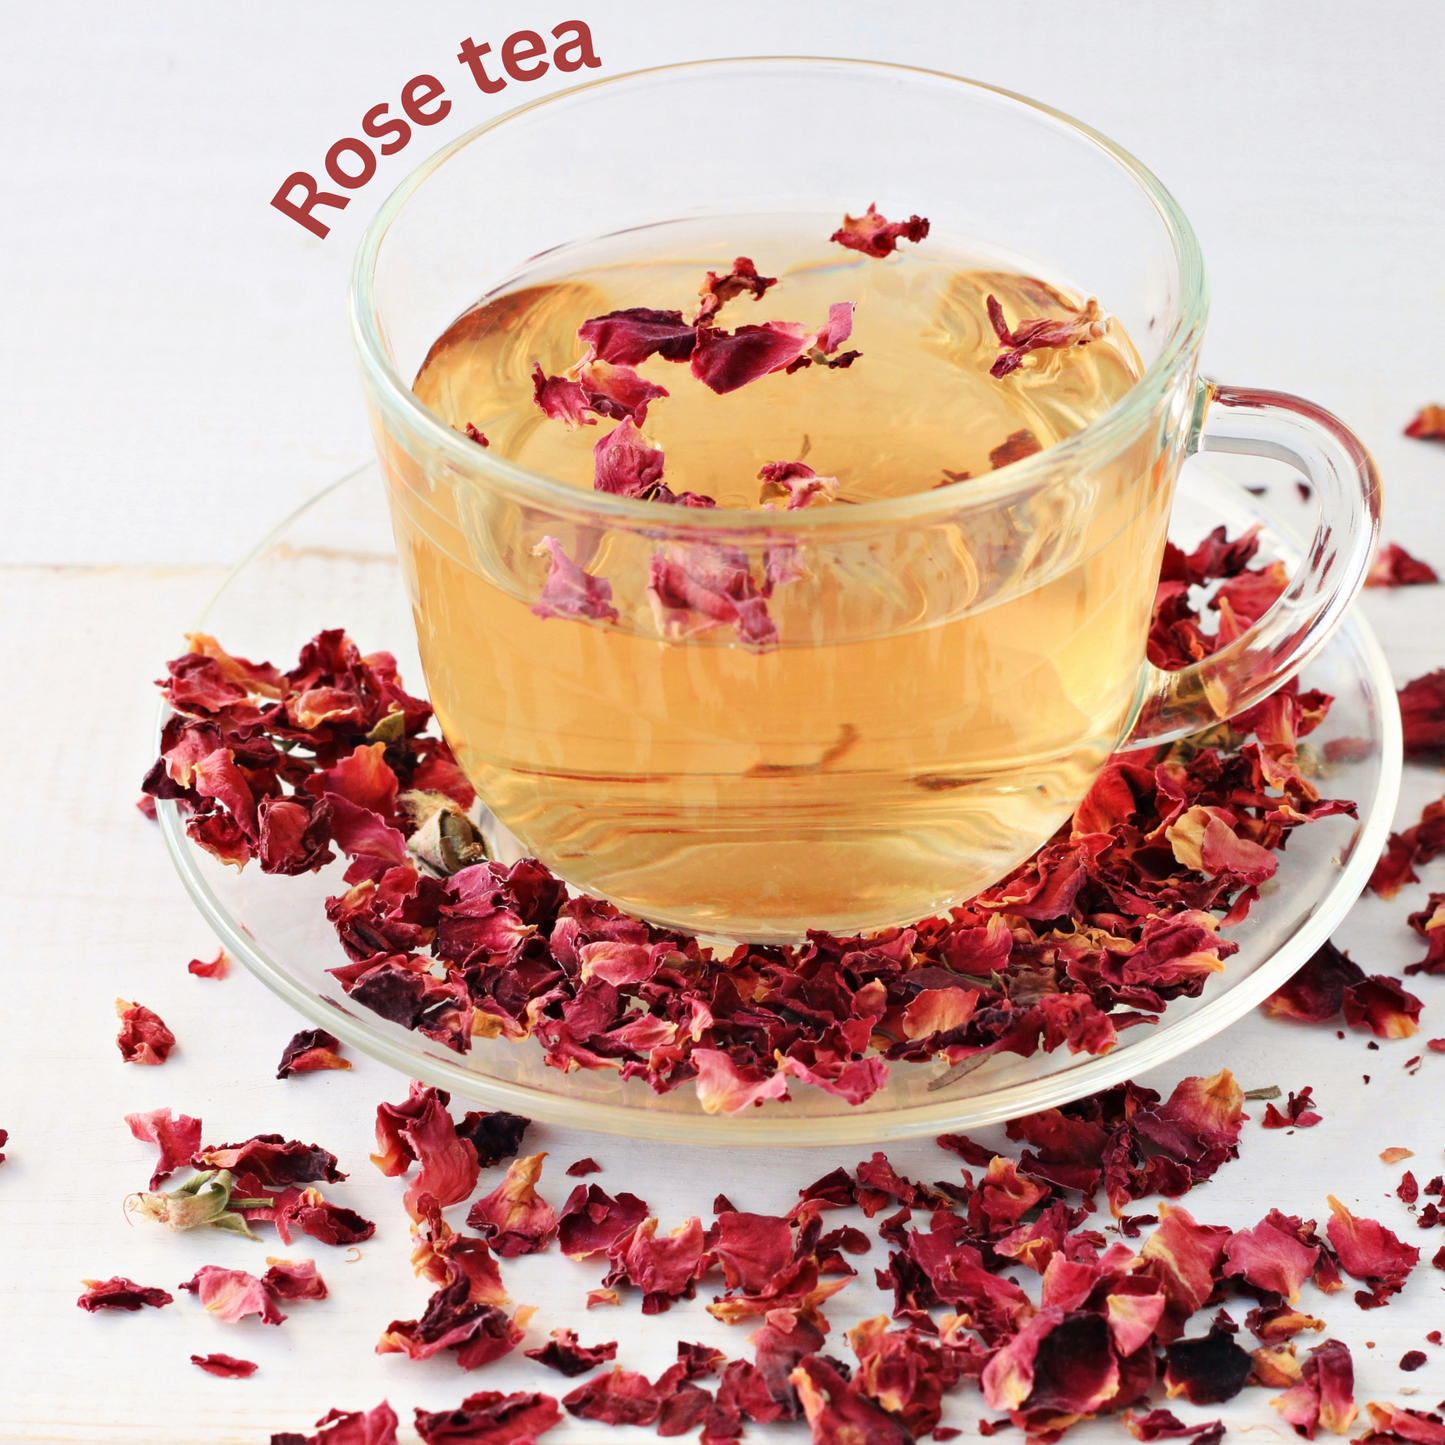 Rose tea